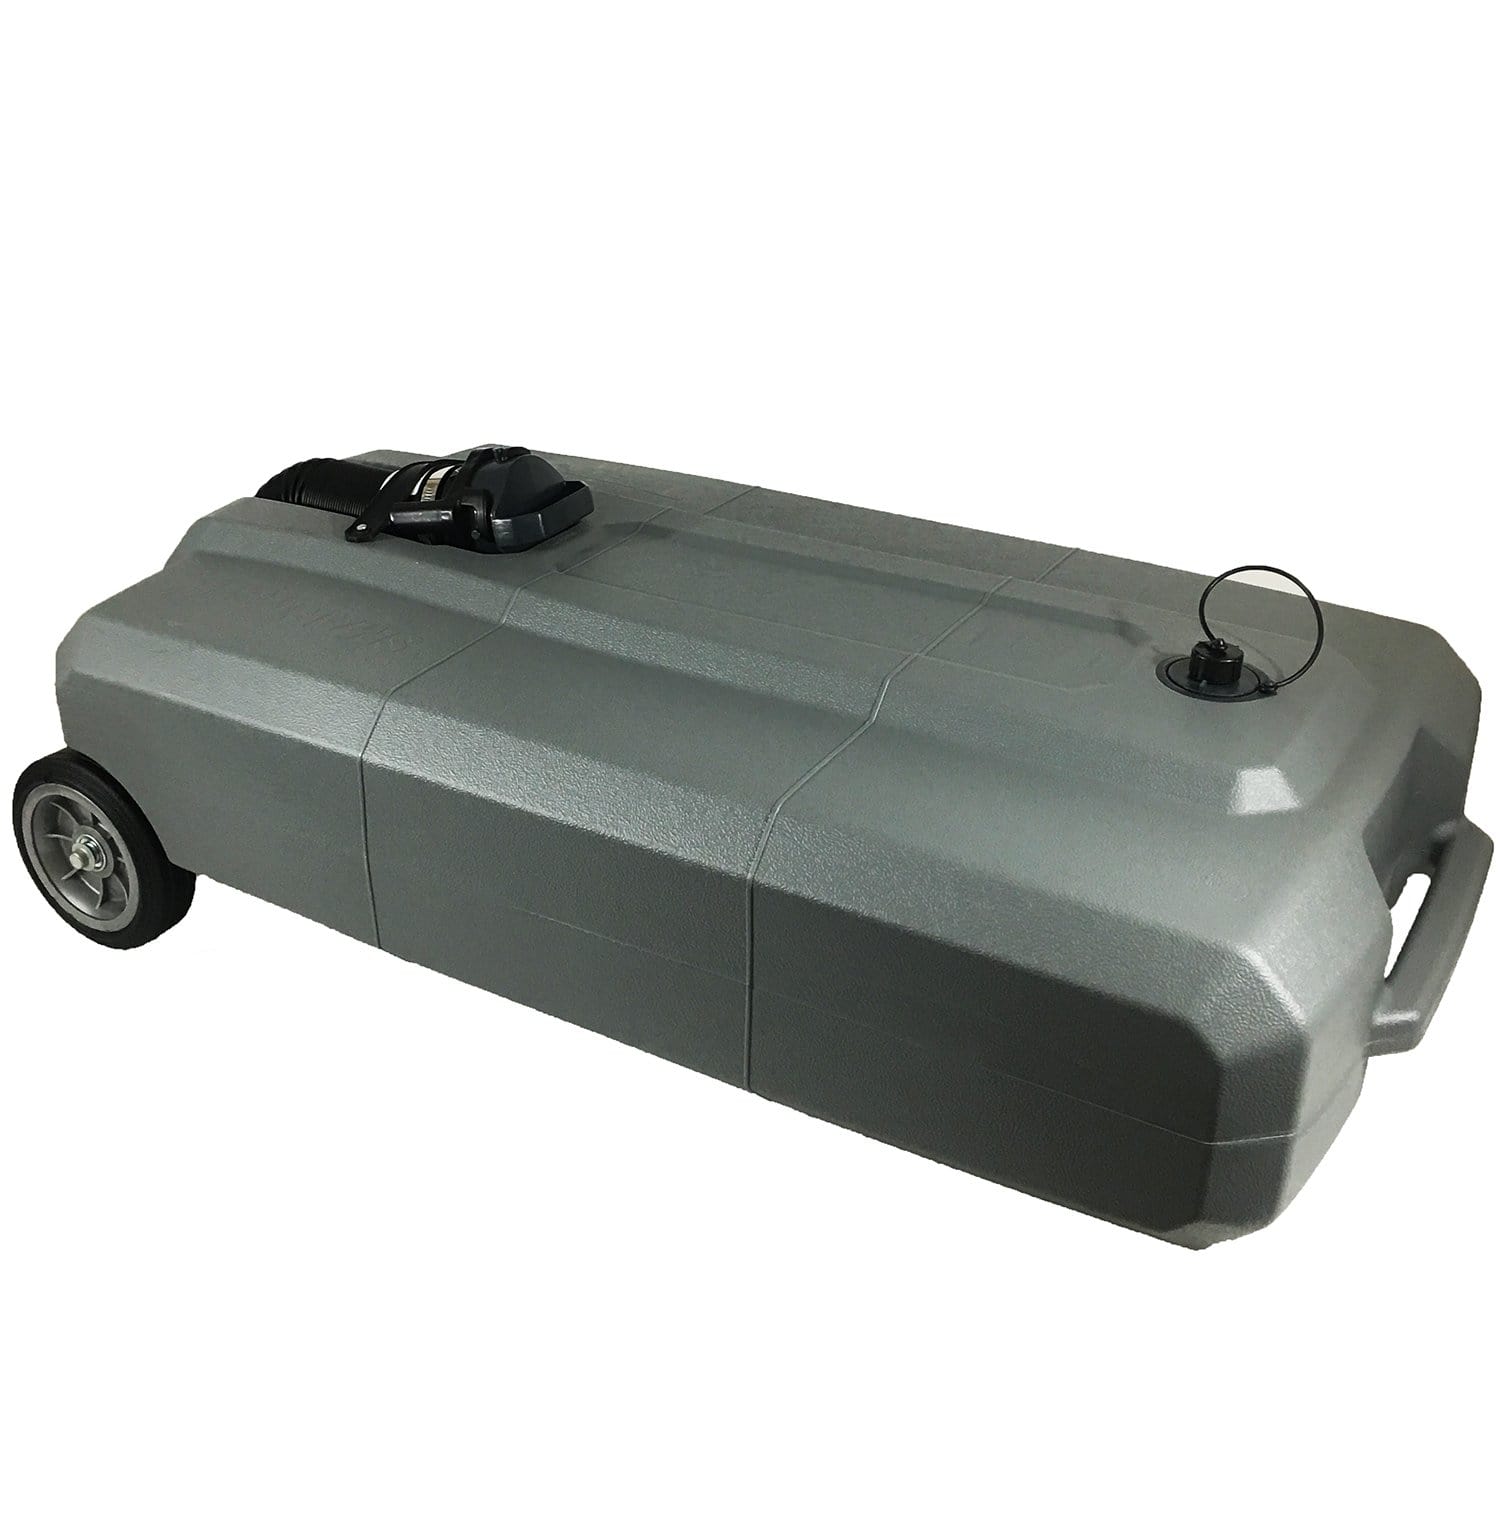 Thetford 40502 27 Gallon SmartTote2 Portable Holding Tank